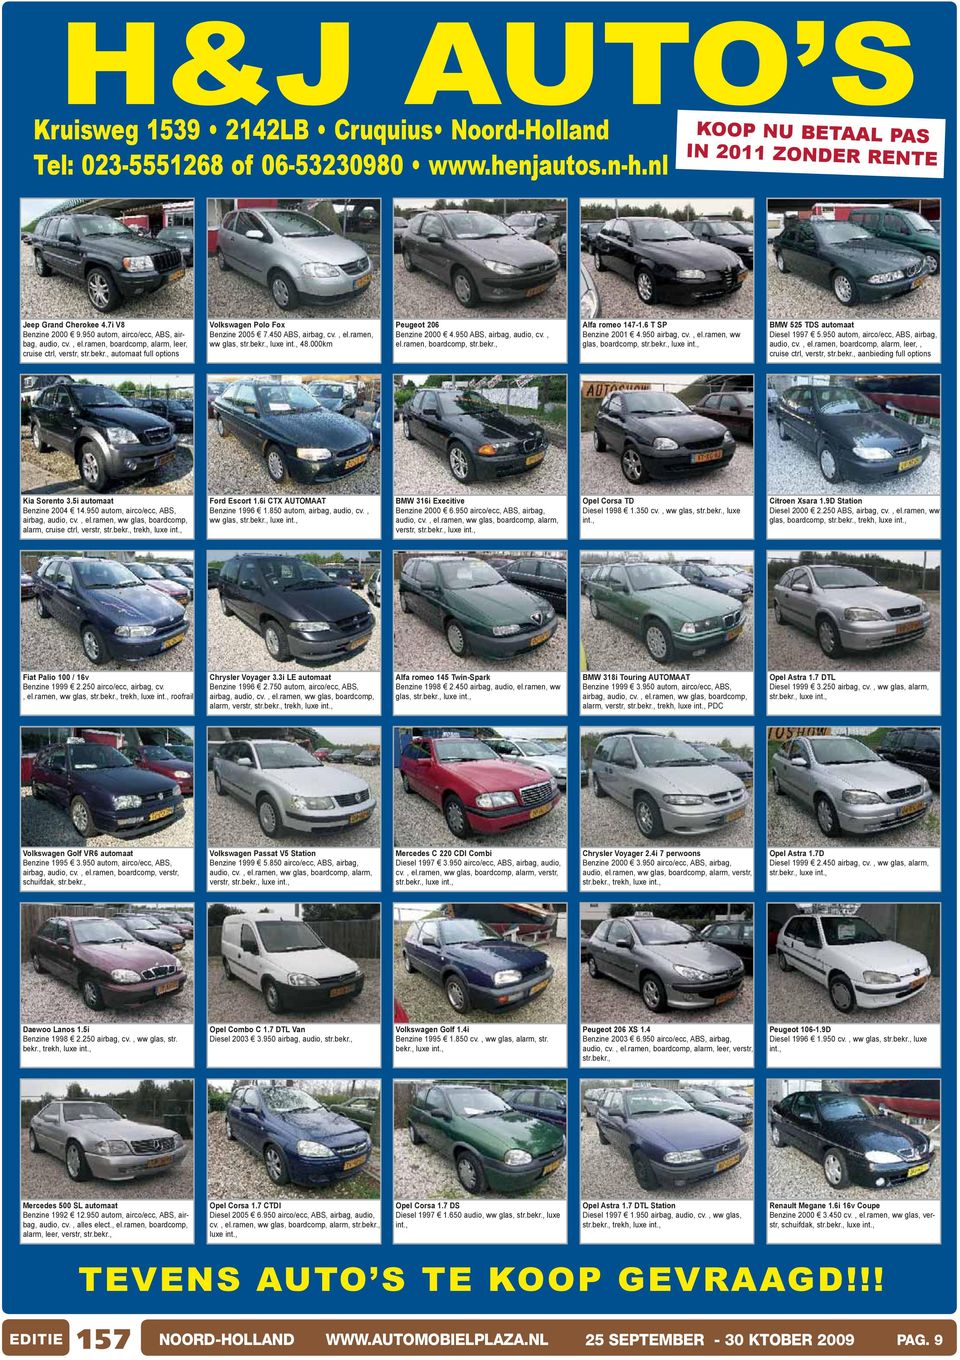 48.000km Peugeot 206 Benzine 2000 4.950 ABS, airbag, audio, cv., el.ramen, boardcomp, str.bekr., Alfa romeo 147-1.6 T SP Benzine 2001 4.950 airbag, cv., el.ramen, ww glas, boardcomp, str.